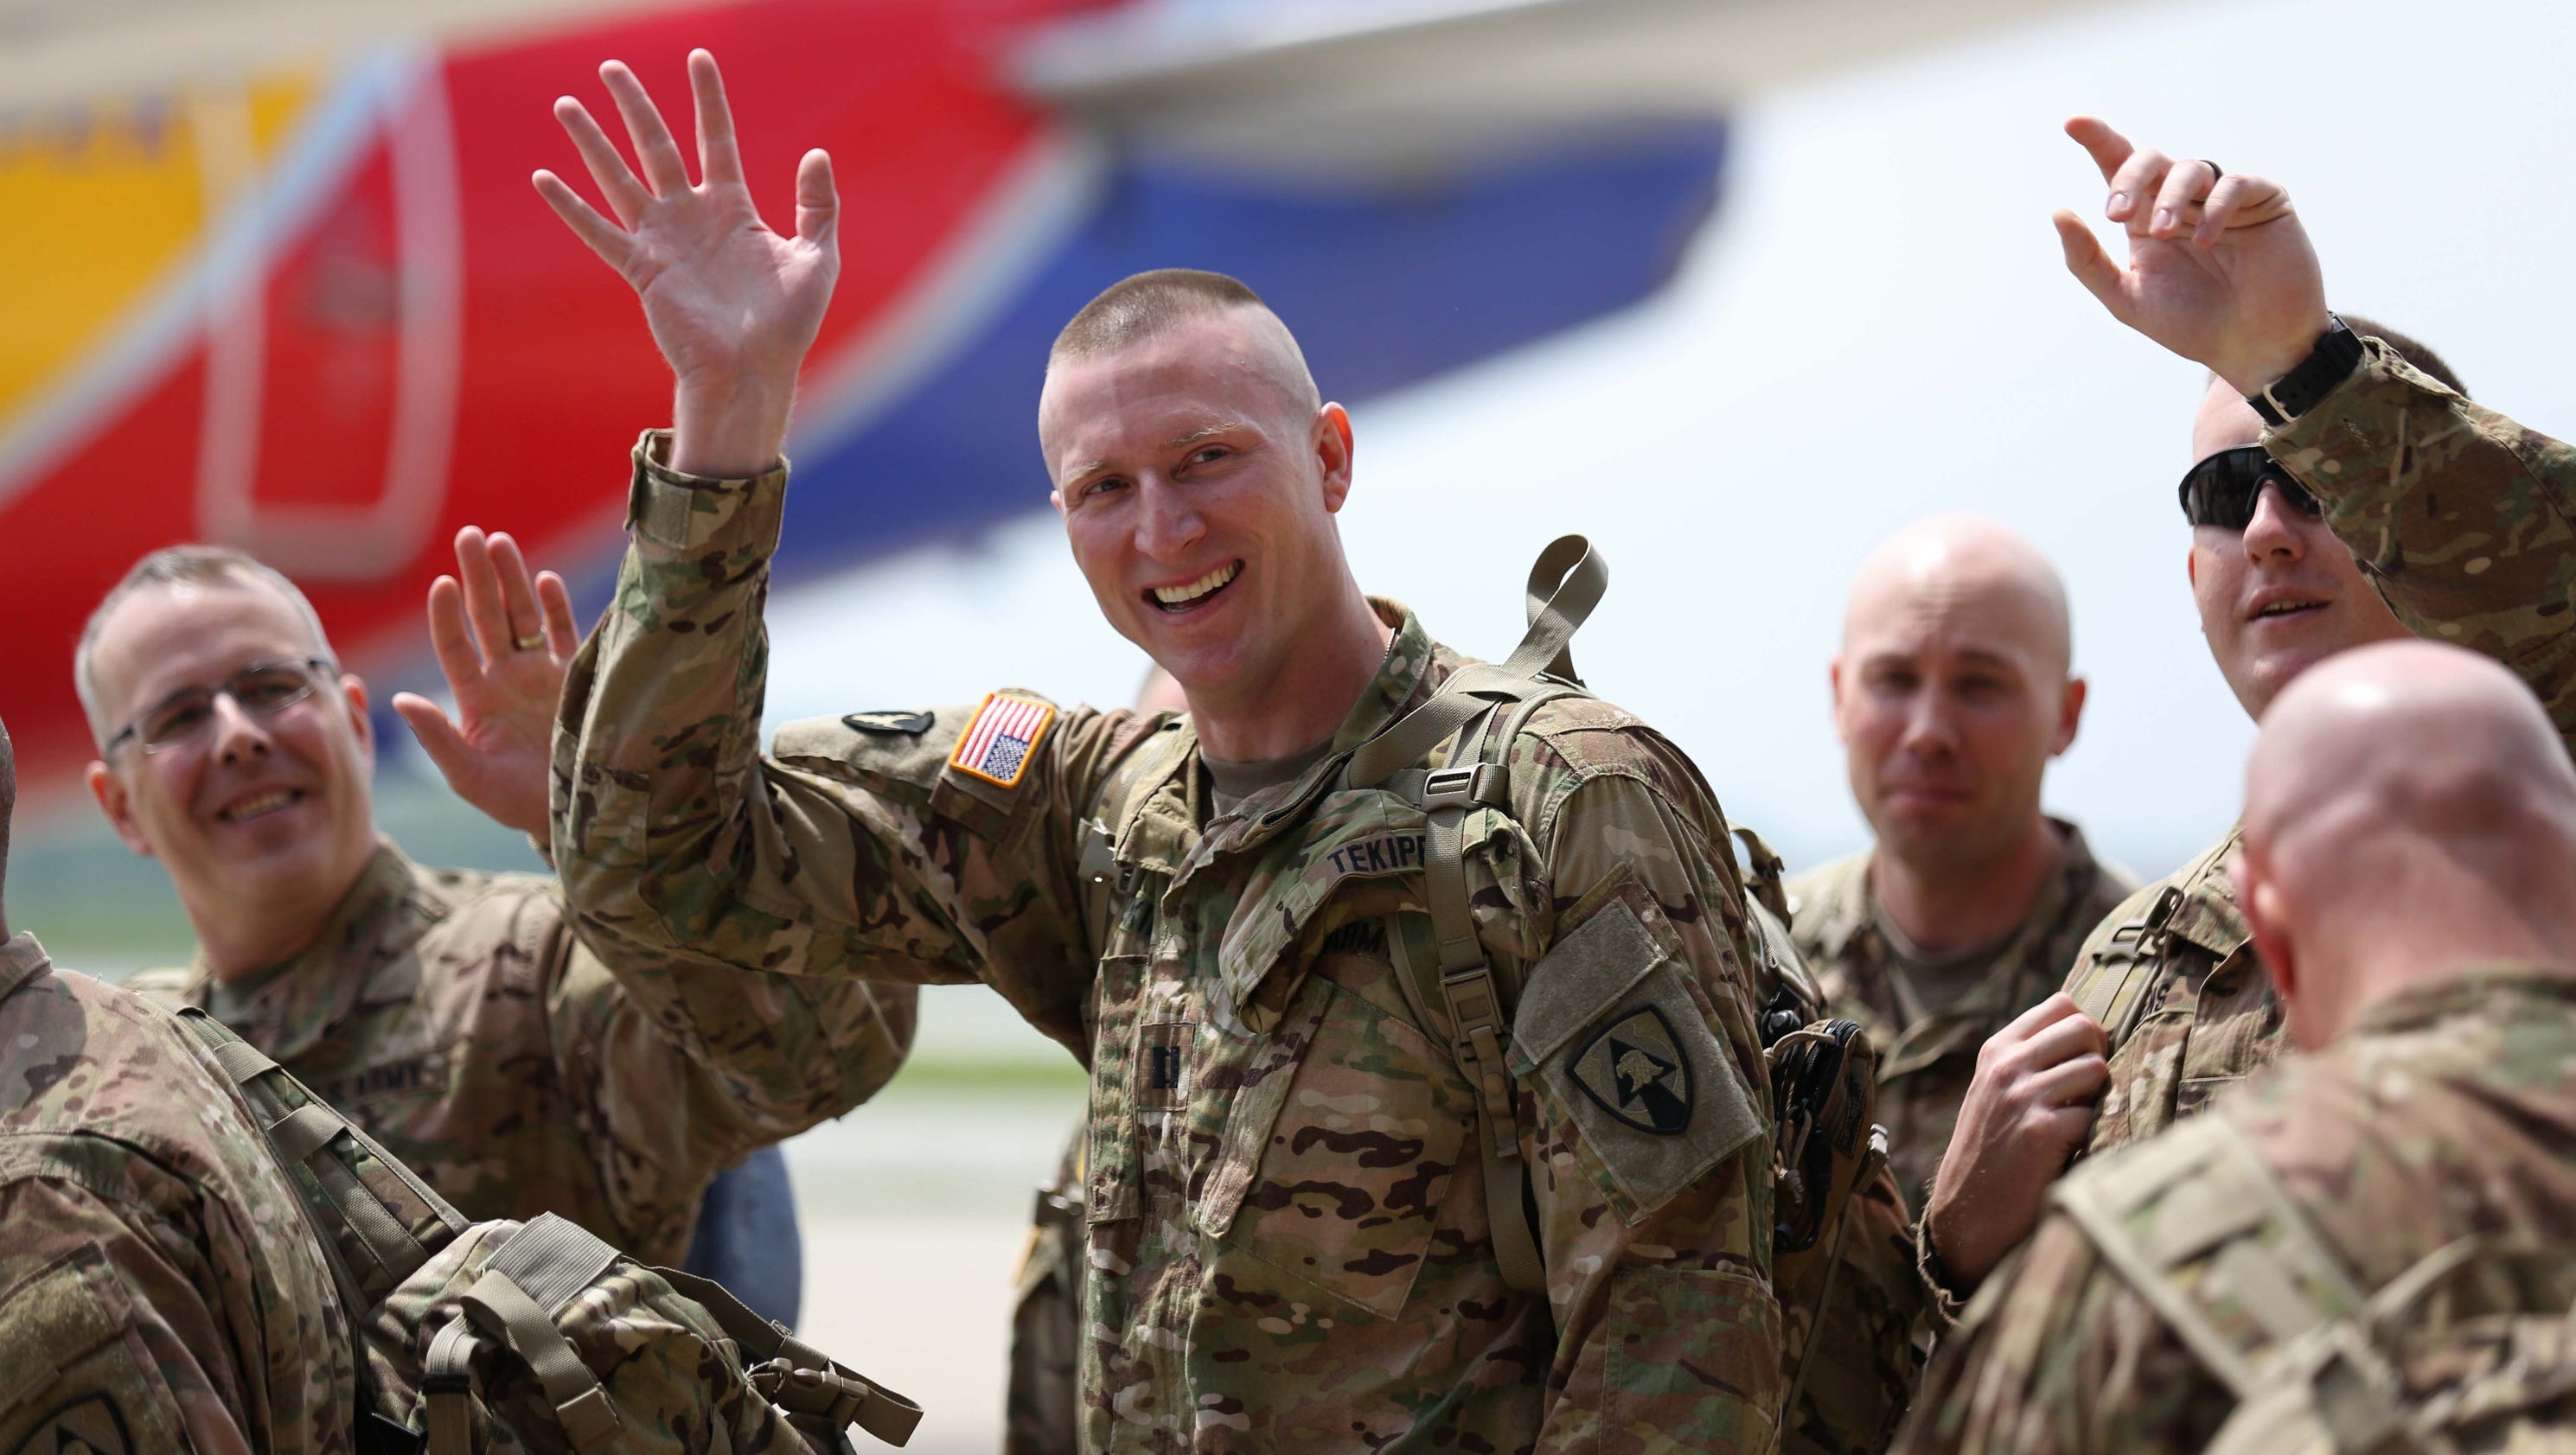 14 photos Iowa Army National Guard sendoff ceremony